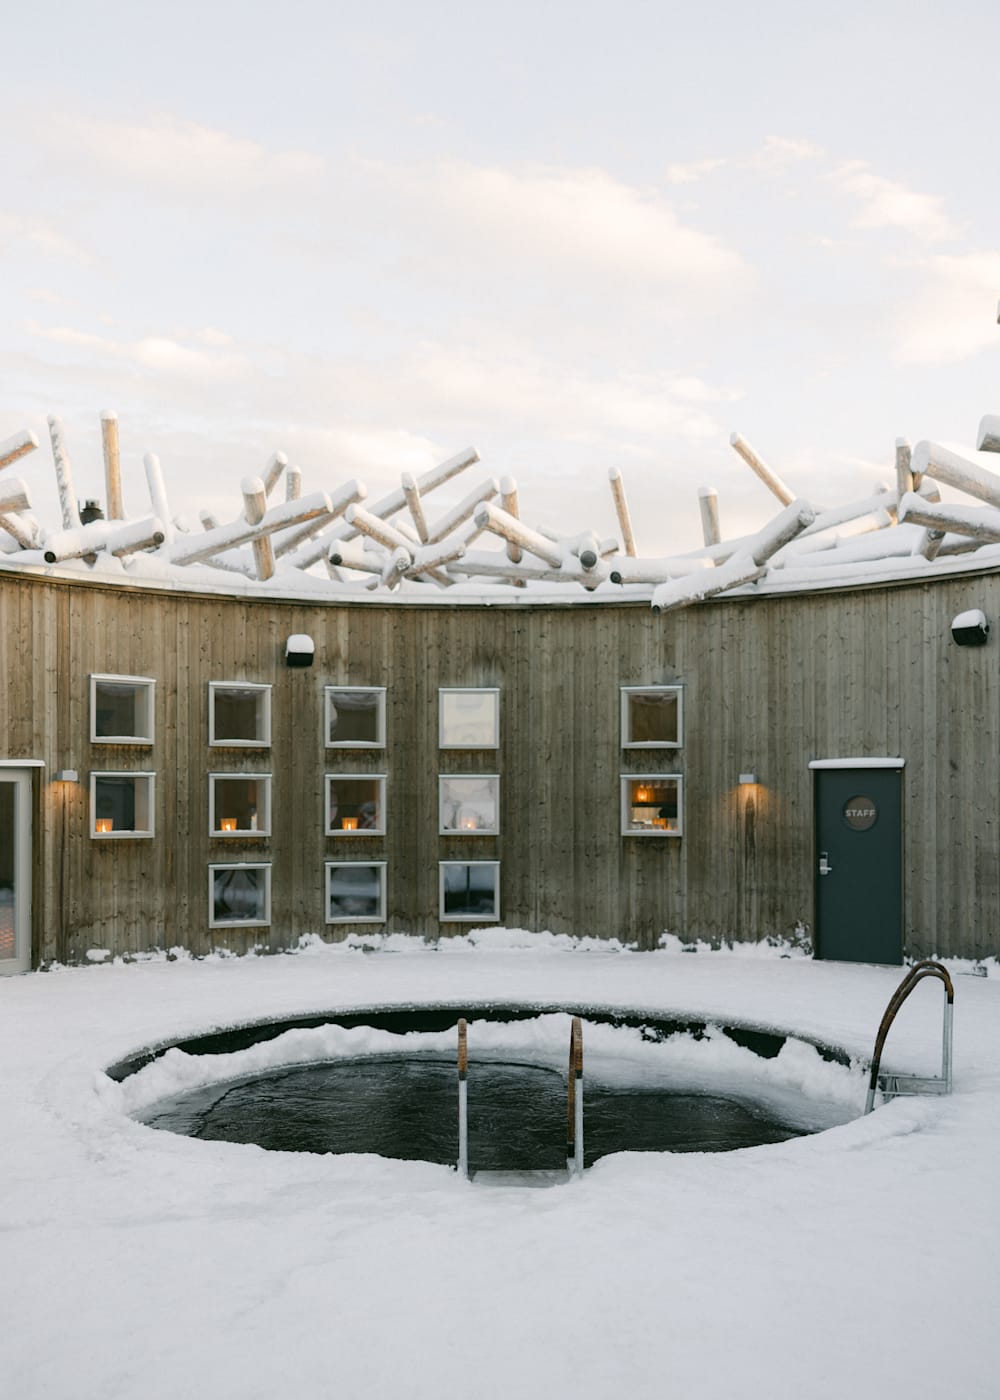 Steps into the natural ice bath at Arctic Bath hotel, Swedish Lapland